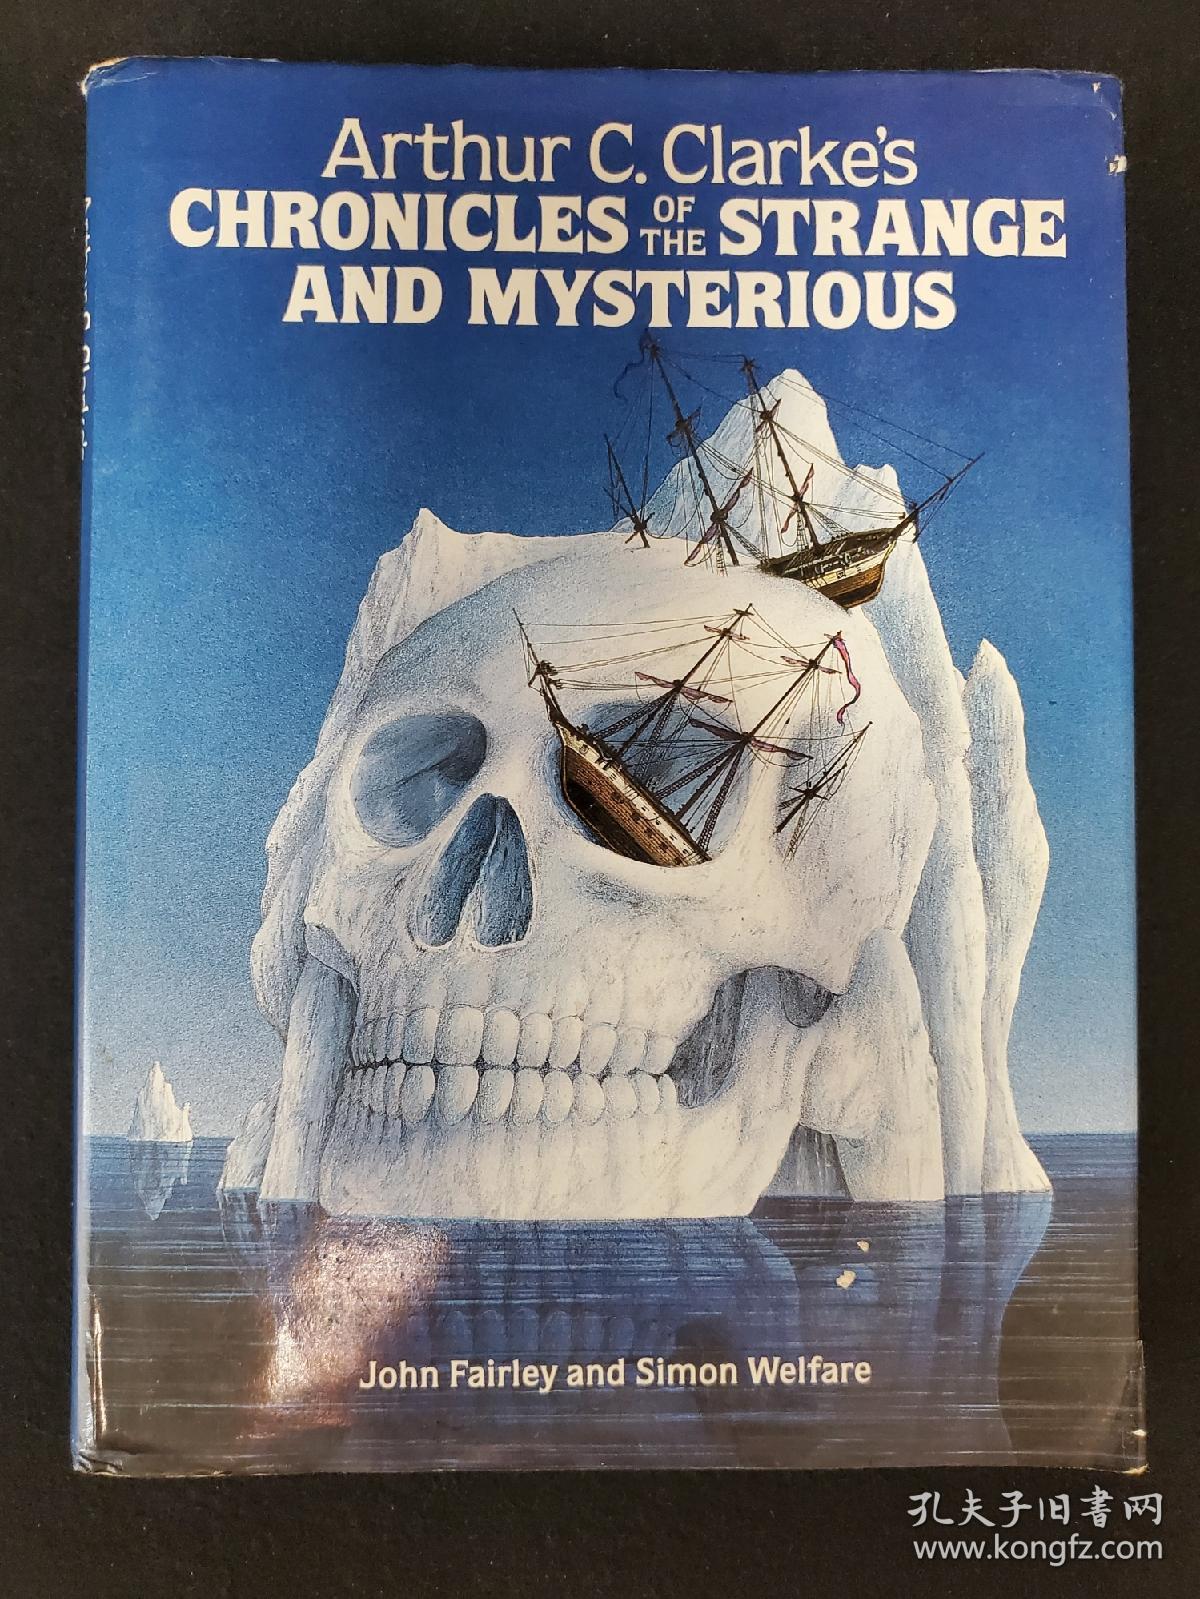 Arthur C. Clarke's Chronicles of the Strange and Mysterious. By John Fairley and Simin Welfare.